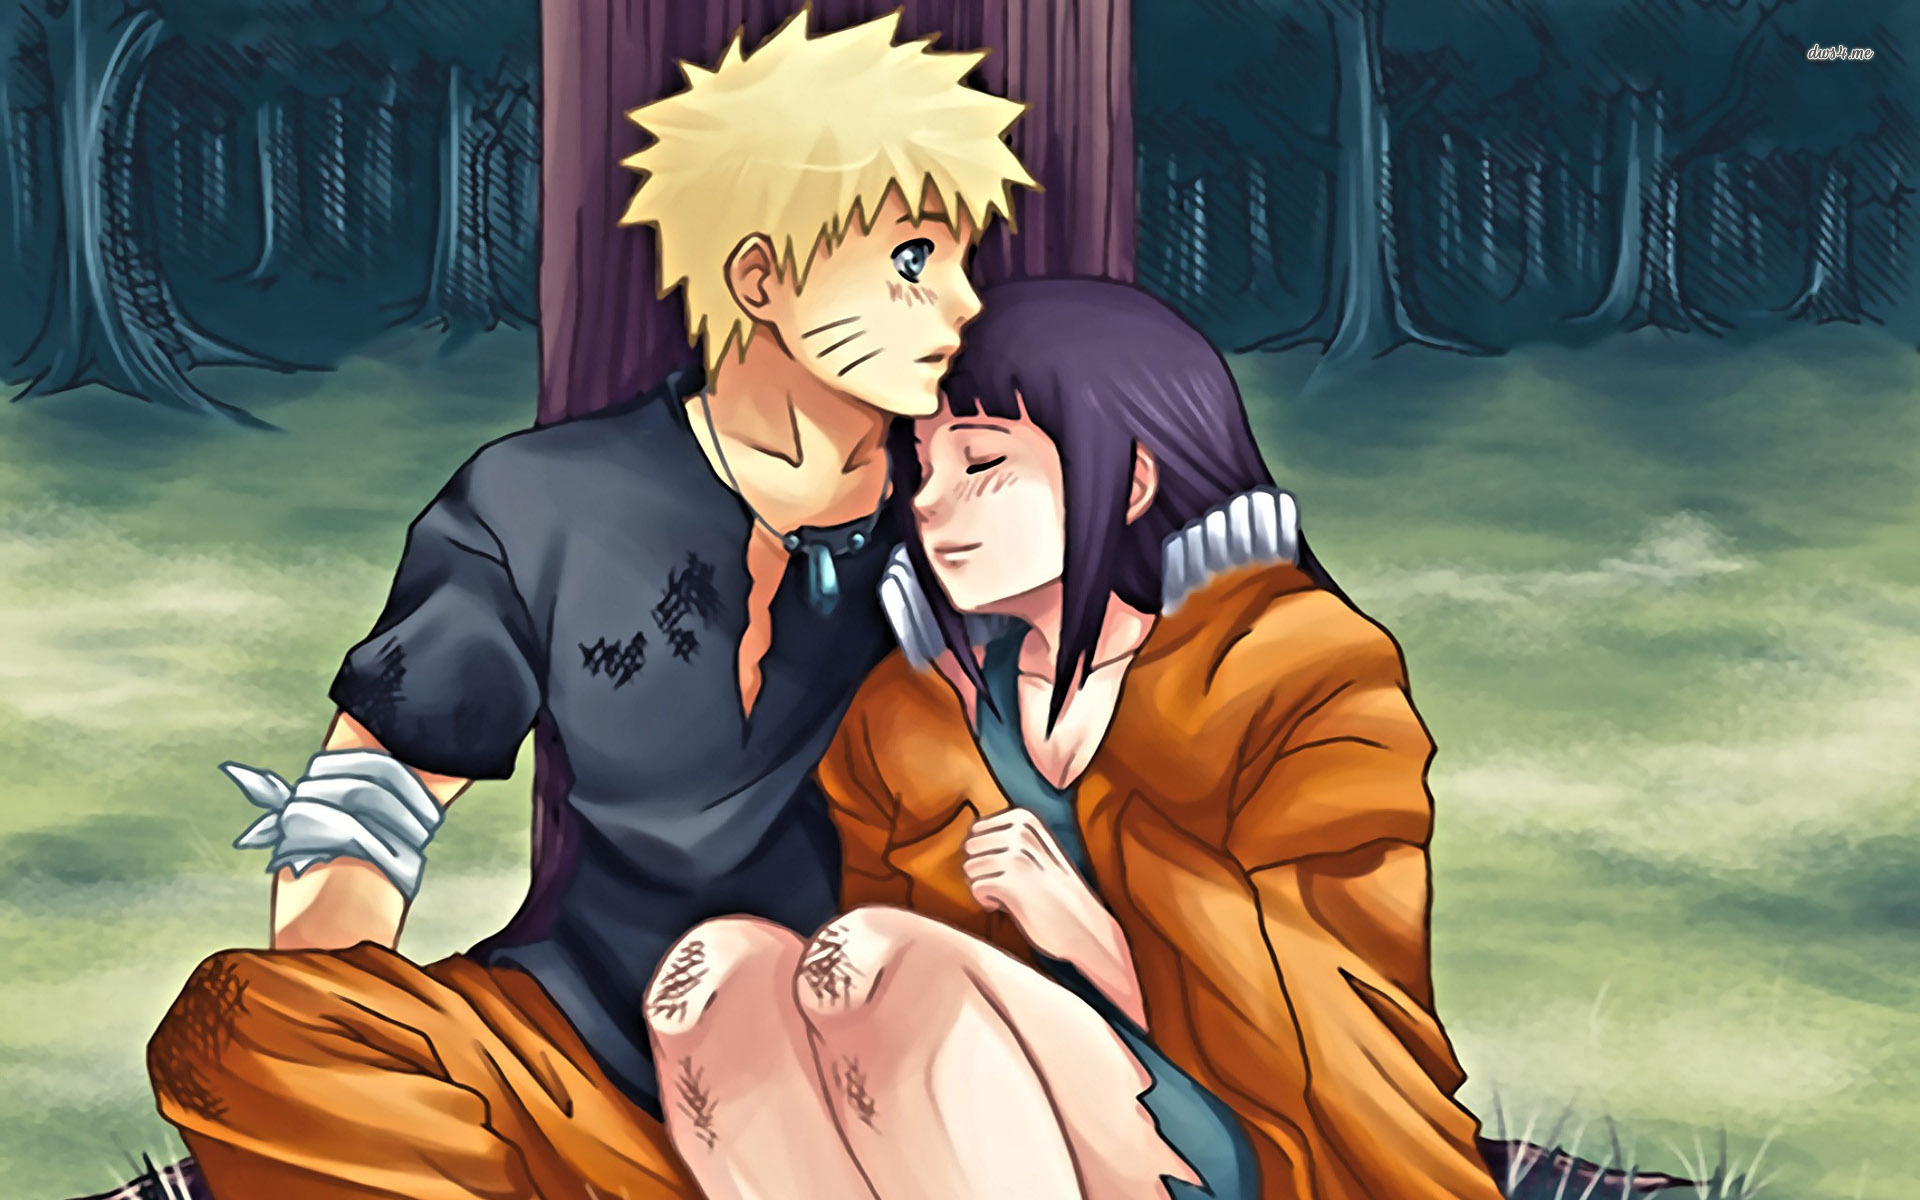 Free A2 Naruto Uzumaki anime Hindata Hyuga HD Desktop background wallpapers downloads